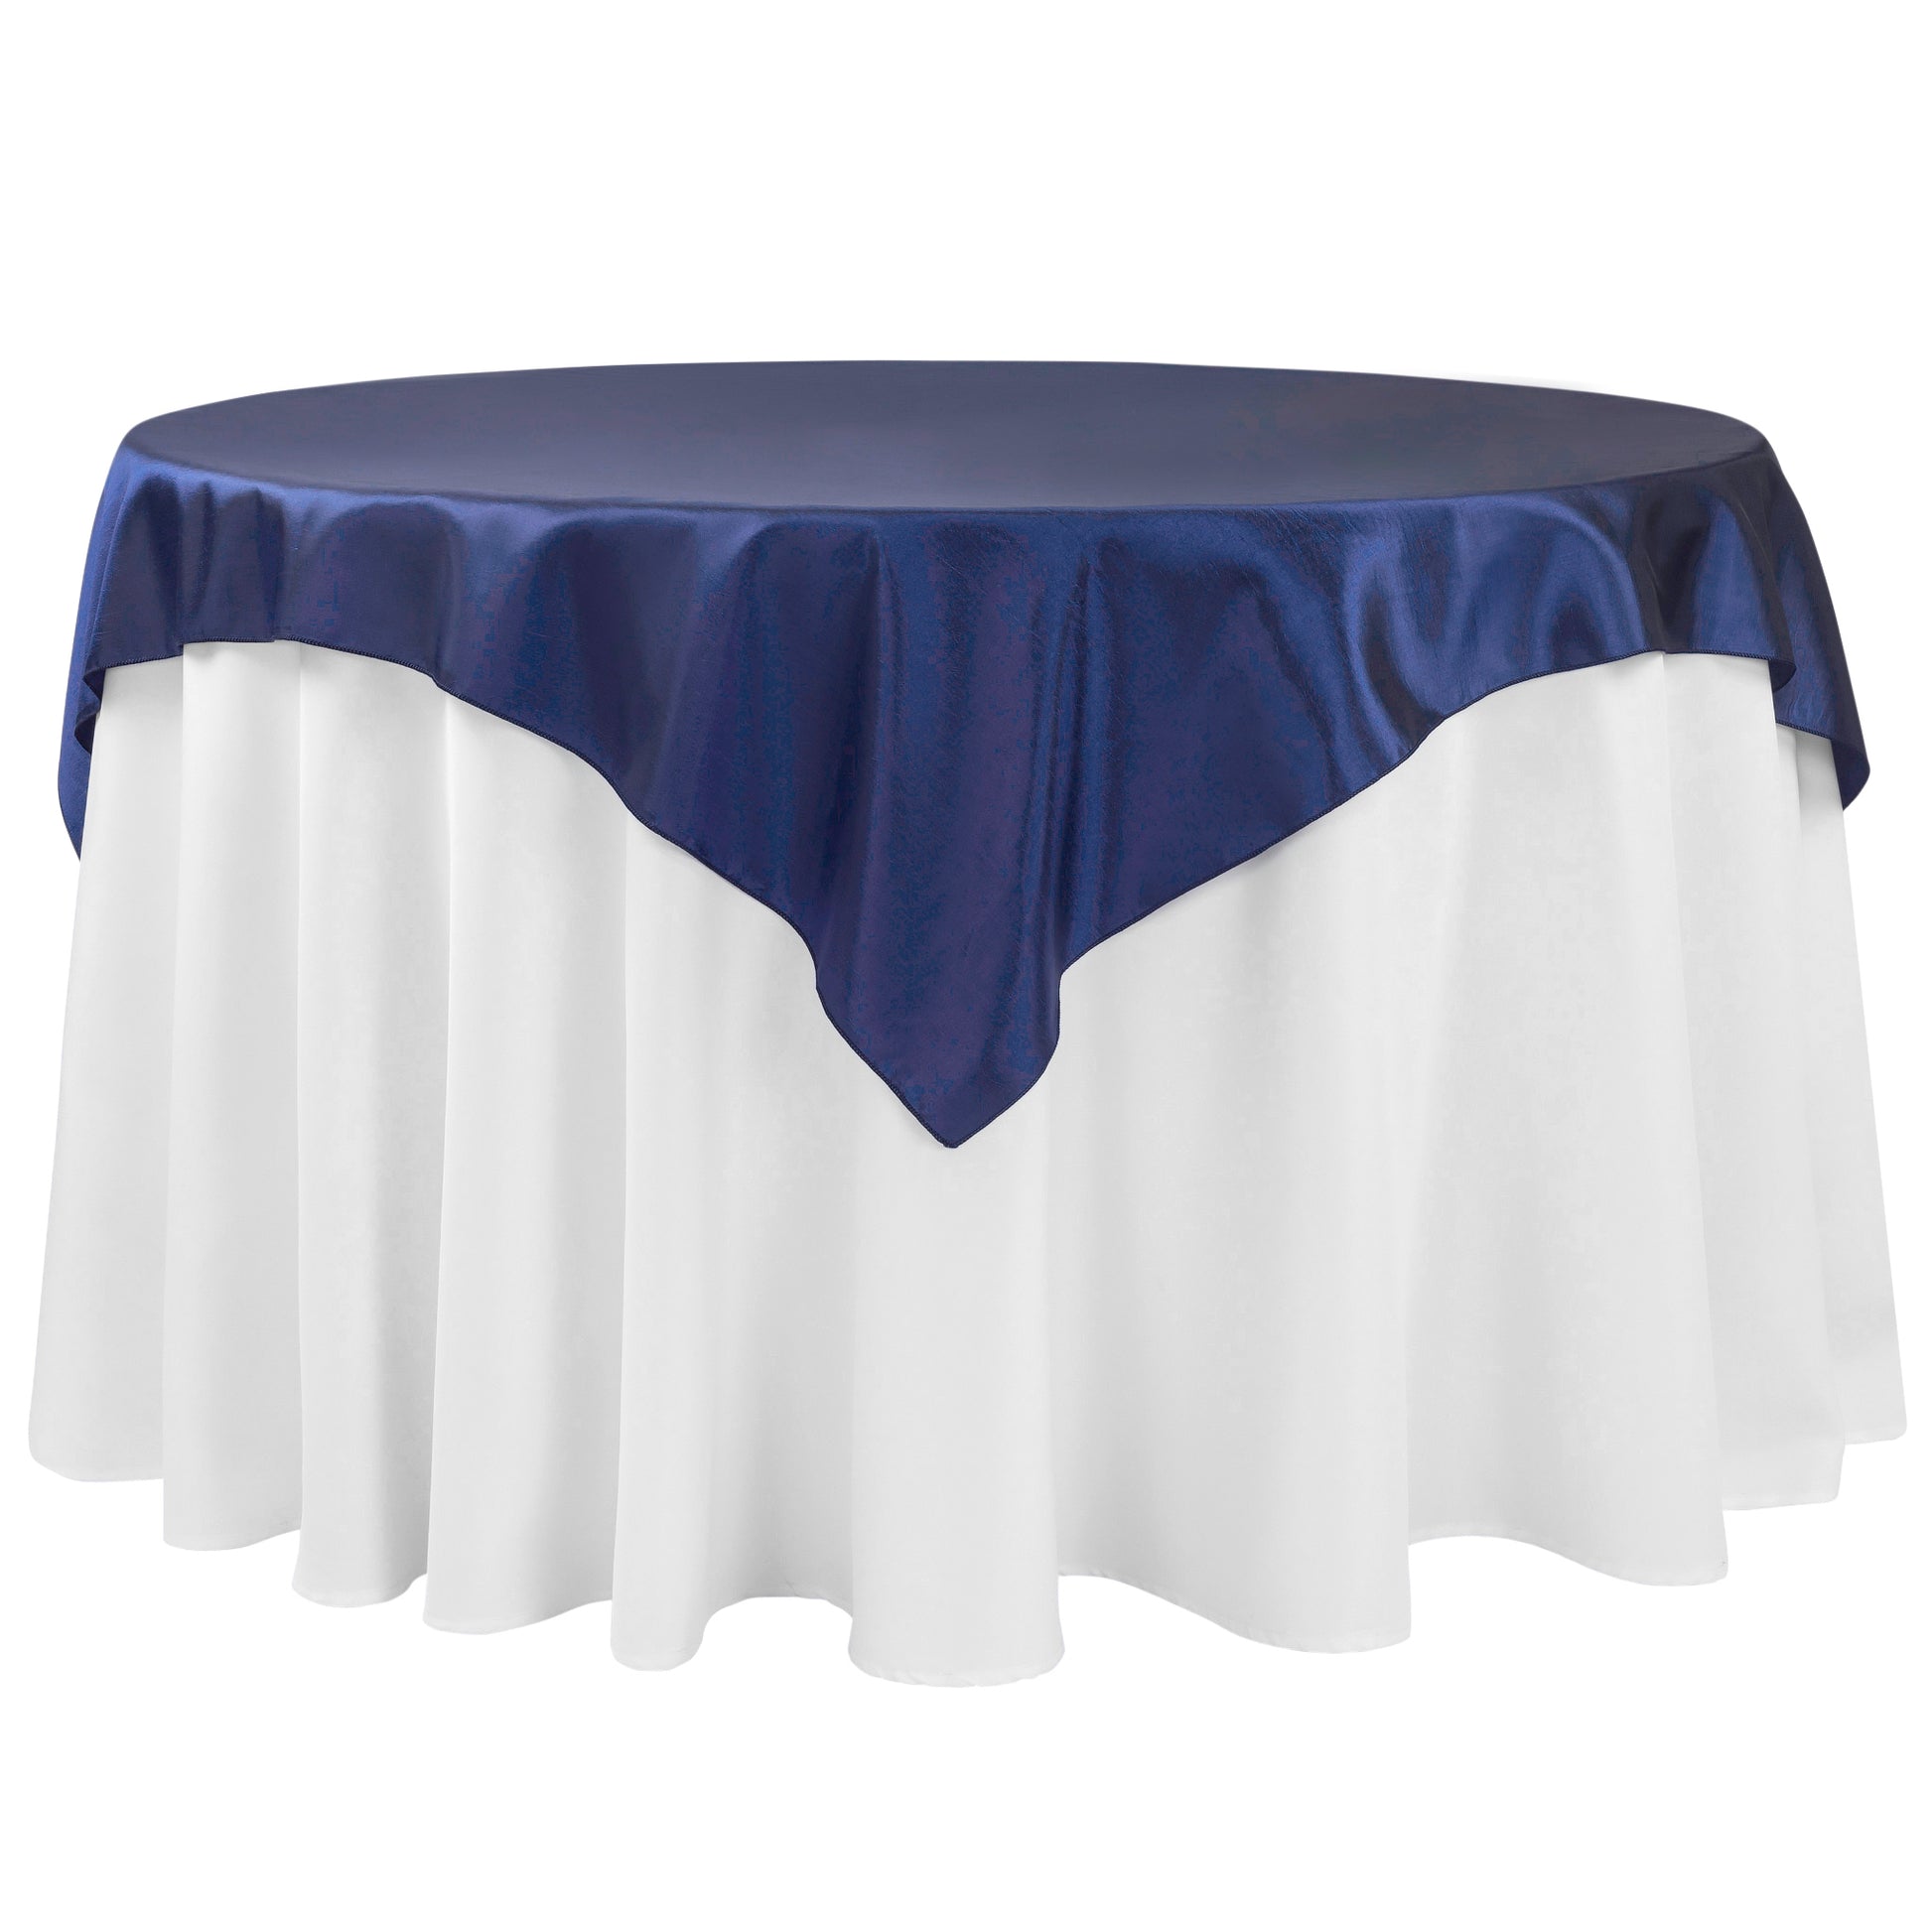 Taffeta Table Overlay Topper 54"x54" Square - Navy Blue - CV Linens